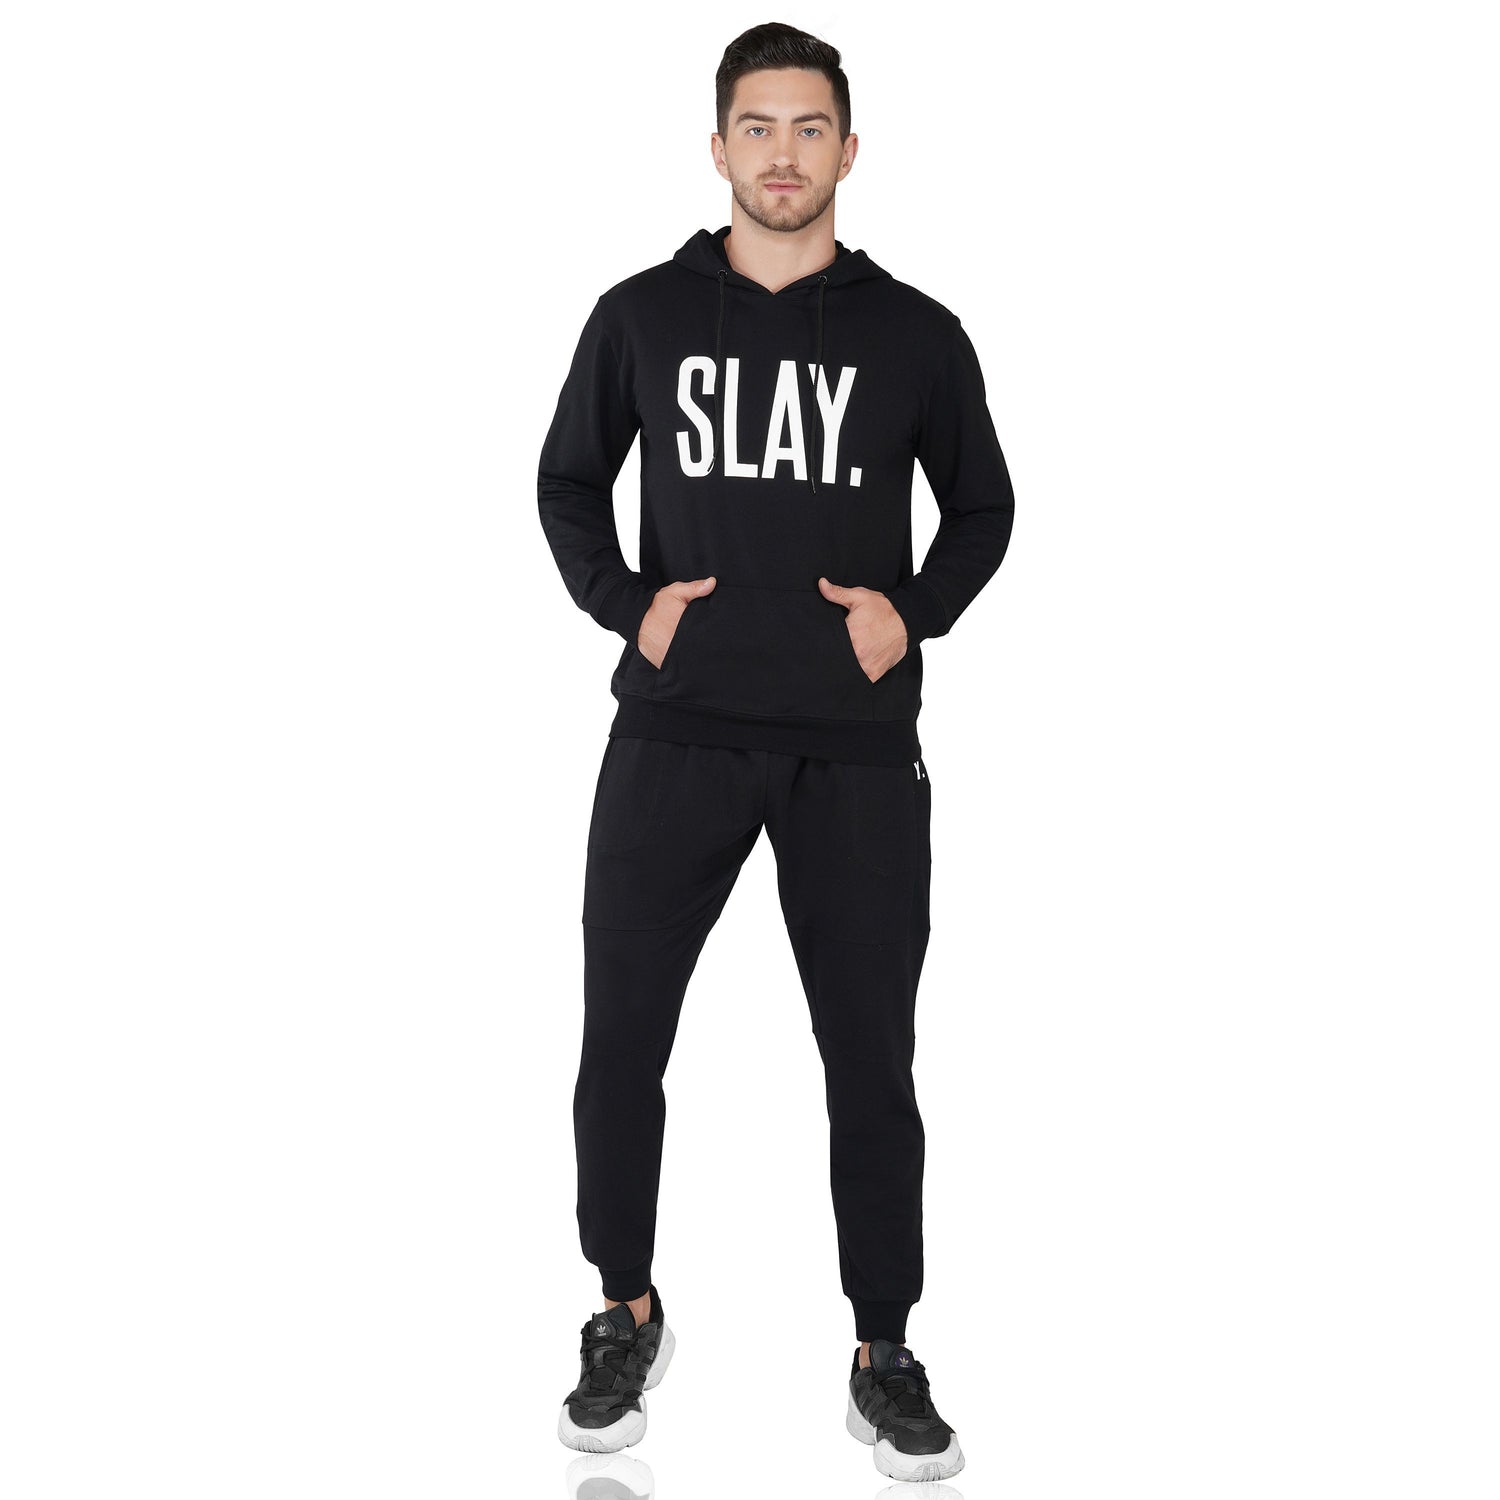 SLAY. Classic Men's Black Printed Tracksuit-clothing-to-slay.myshopify.com-Tracksuit